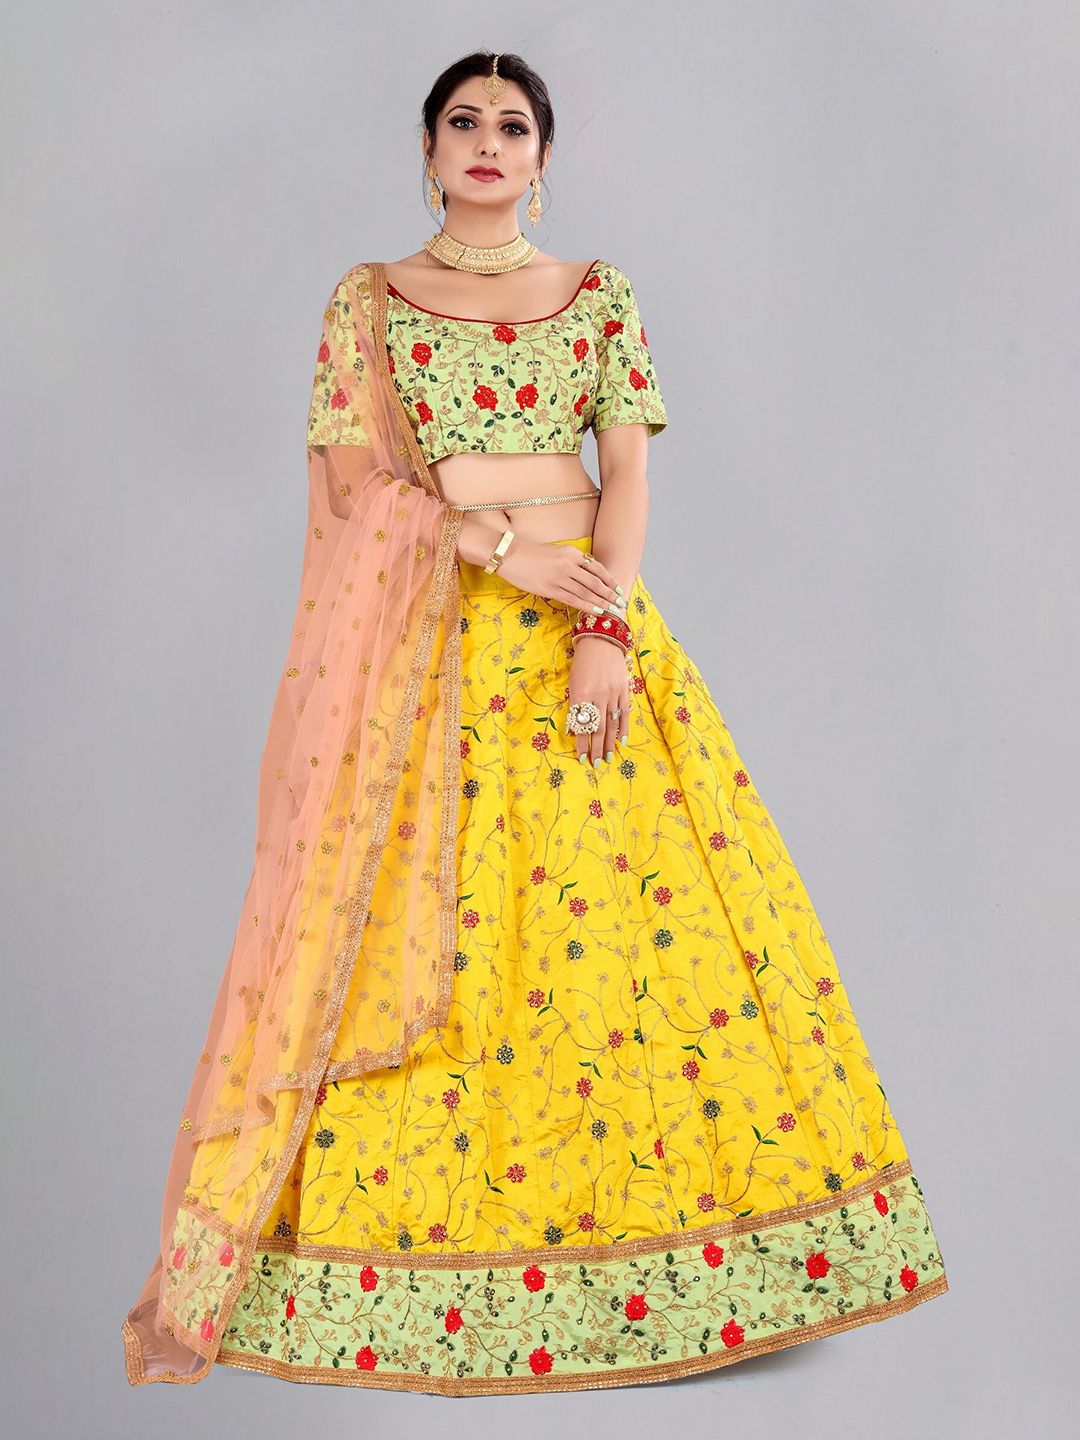 Atsevam Women Yellow Floral Embroidered Lehenga Choli Price in India